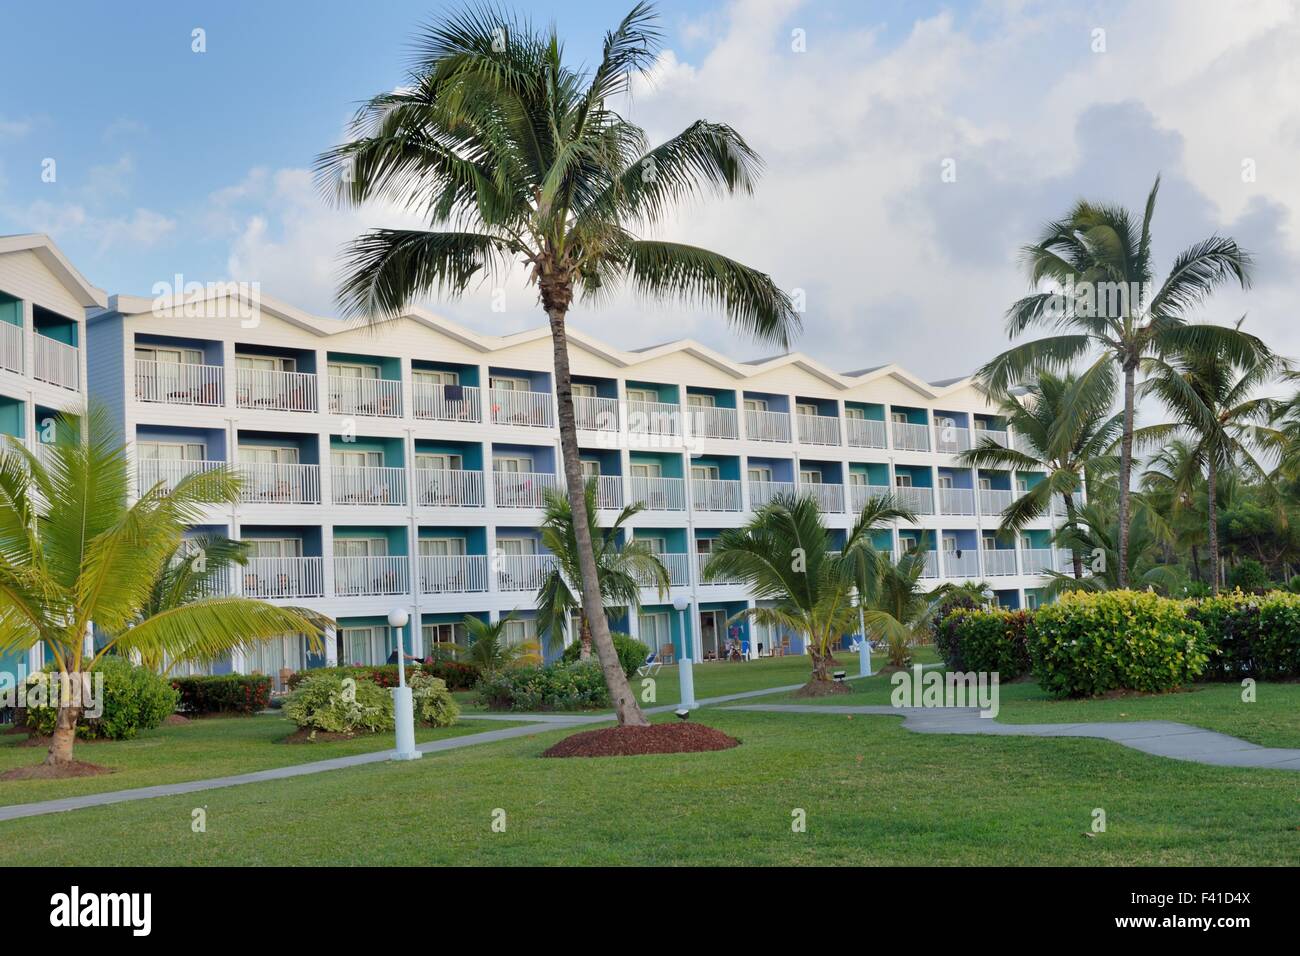 Caraibi hotel complex Foto Stock